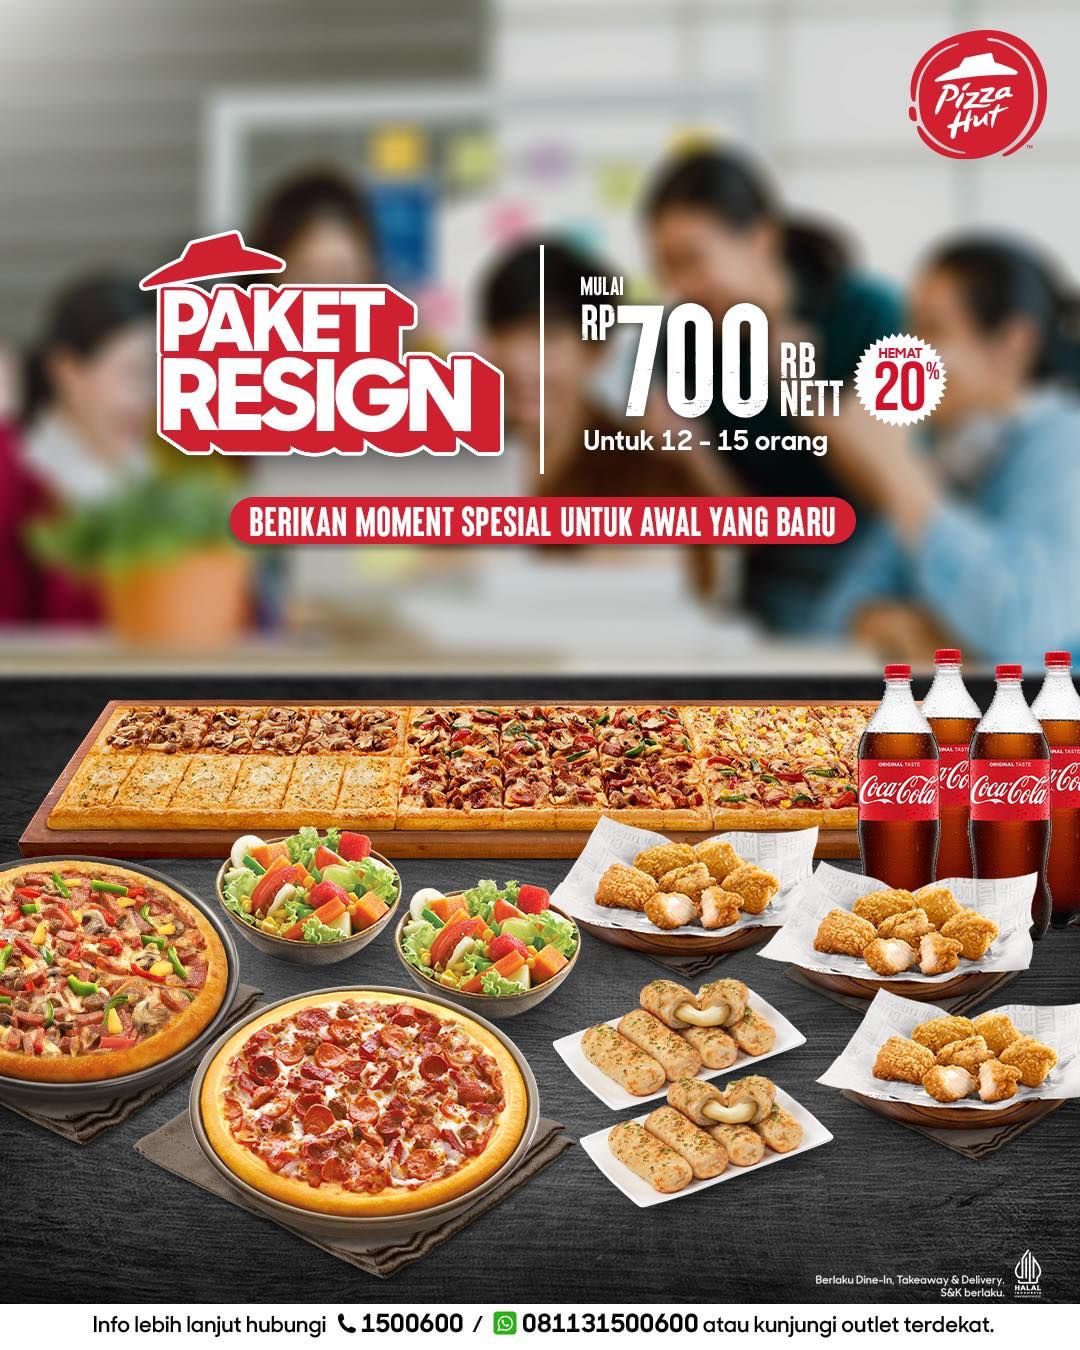 Promo PIZZA HUT PAKET RESIGN Hemat hingga 20%